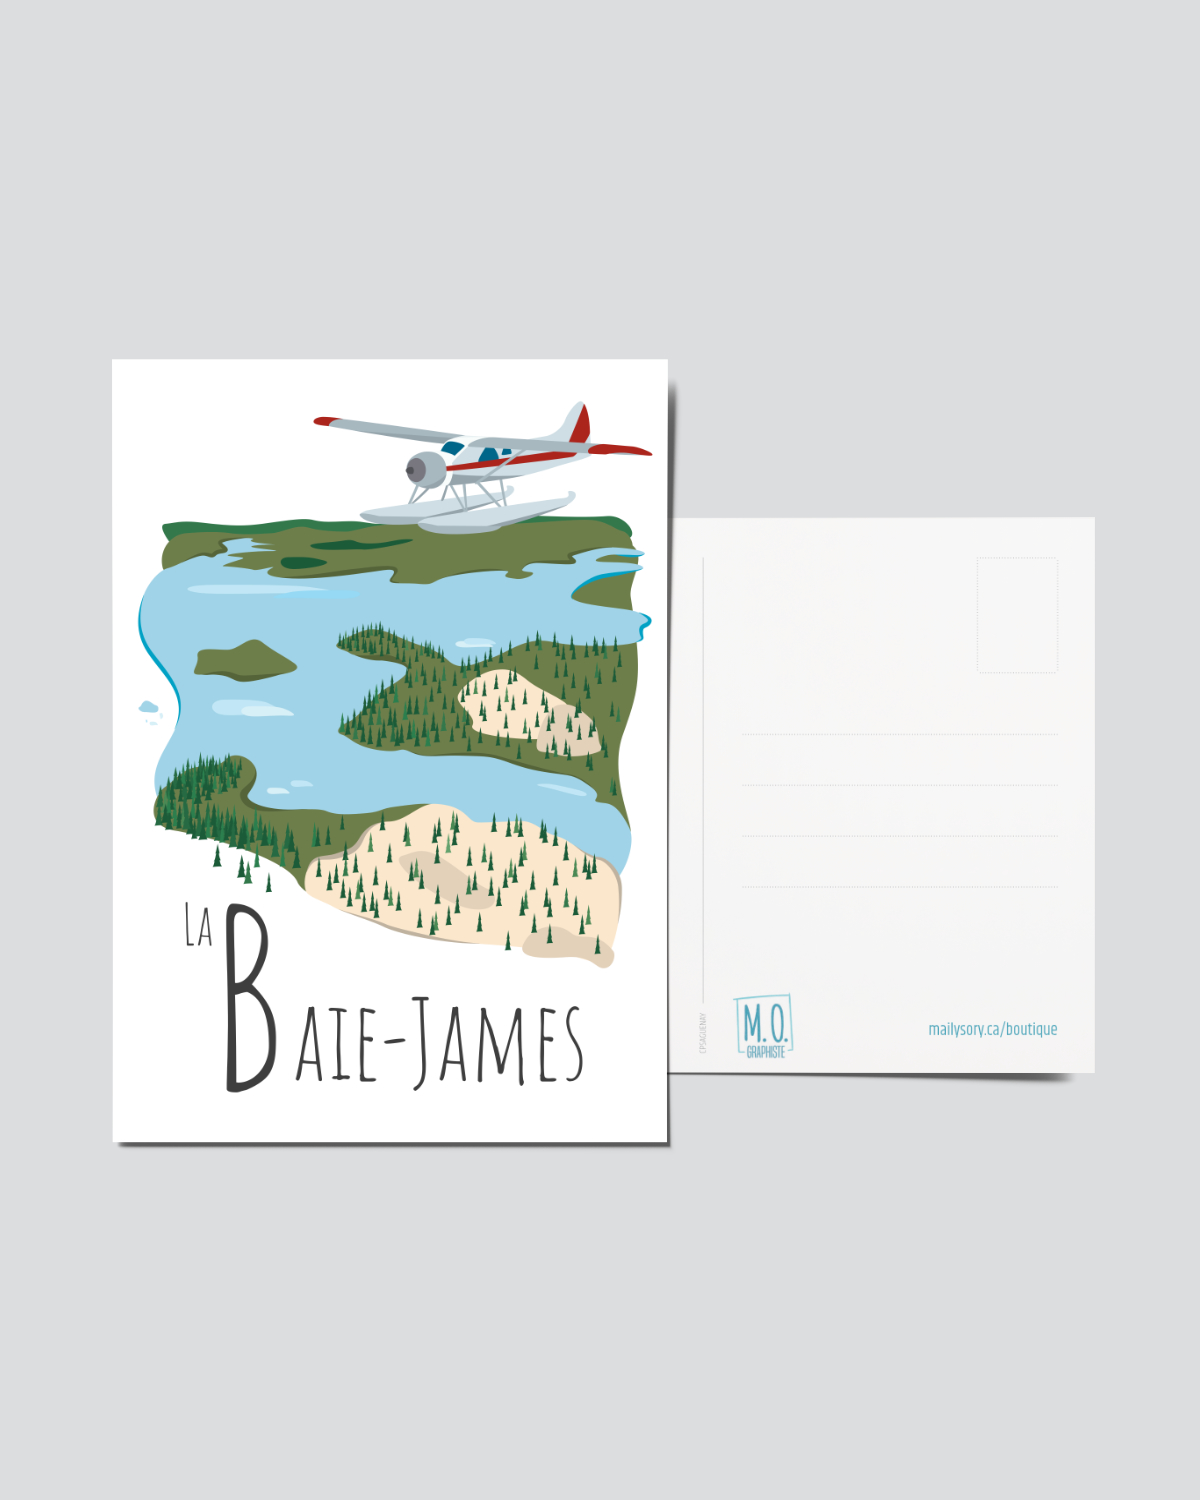 Mailys ORY - Graphiste | Illustration - Carte postale - La Baie-James